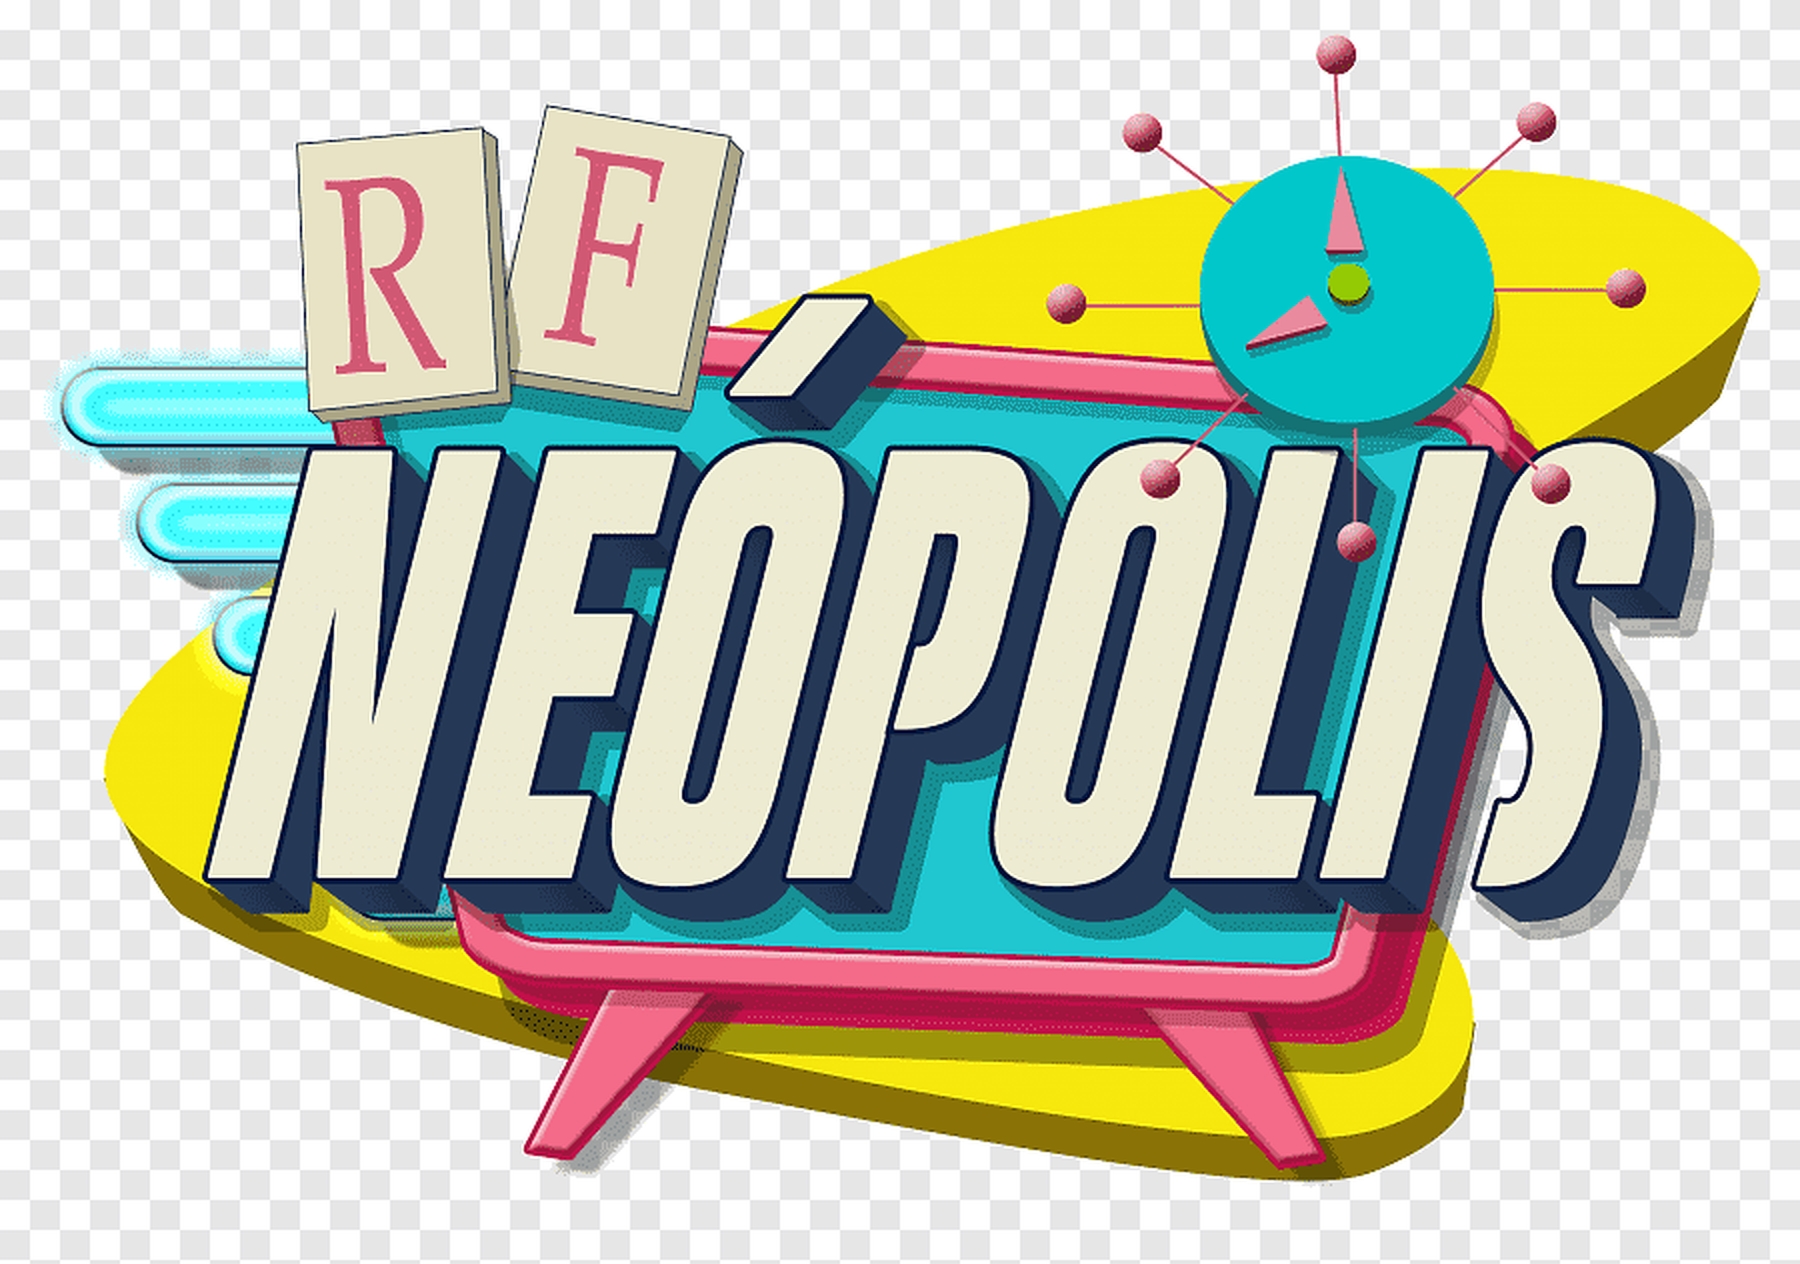 Neopolis demo